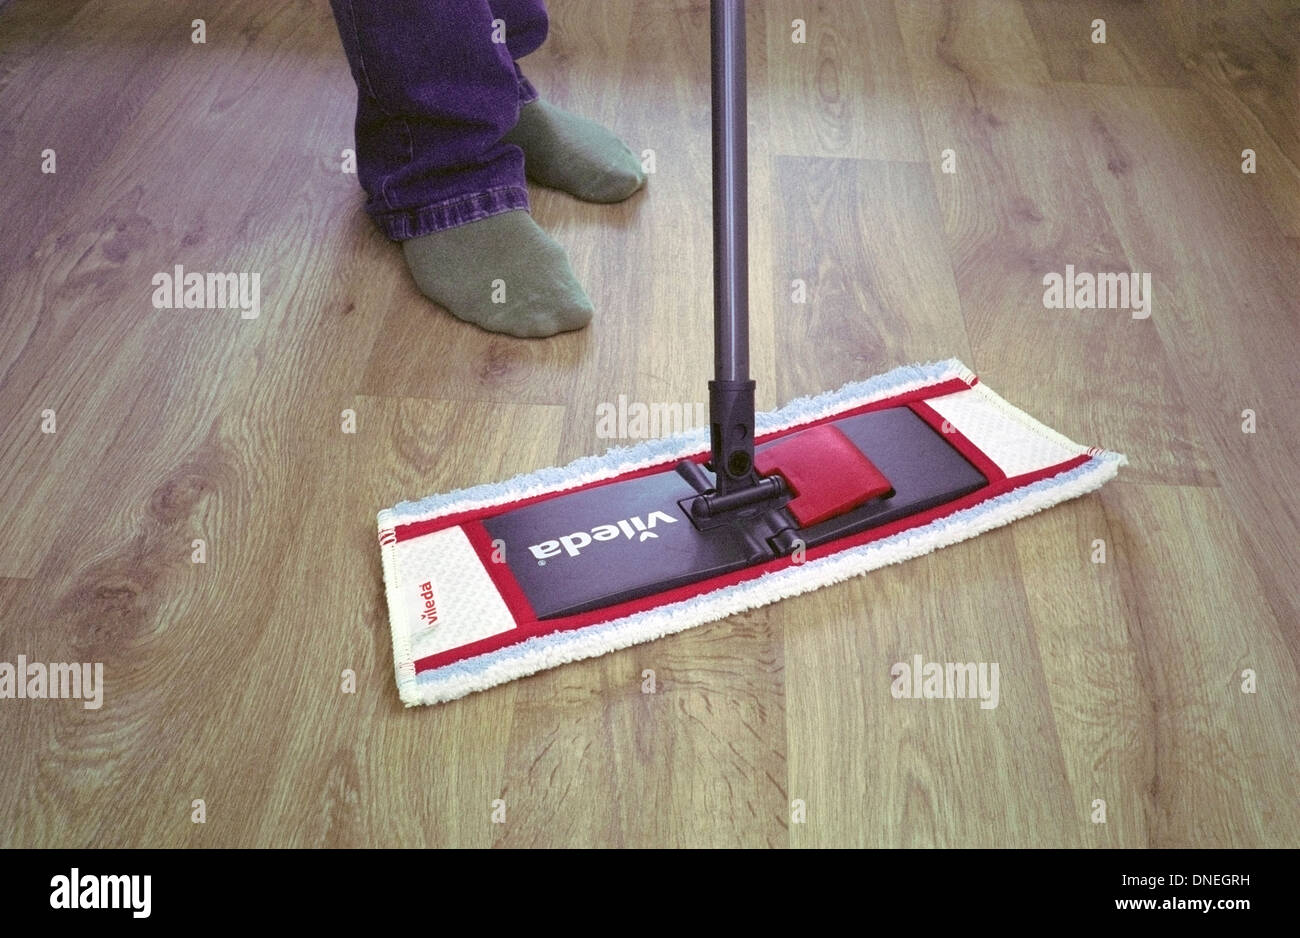 Man Using a Vileda Mop on a Vinyl Wood Effect Floor, UK MODEL RELEASED Stock Photo